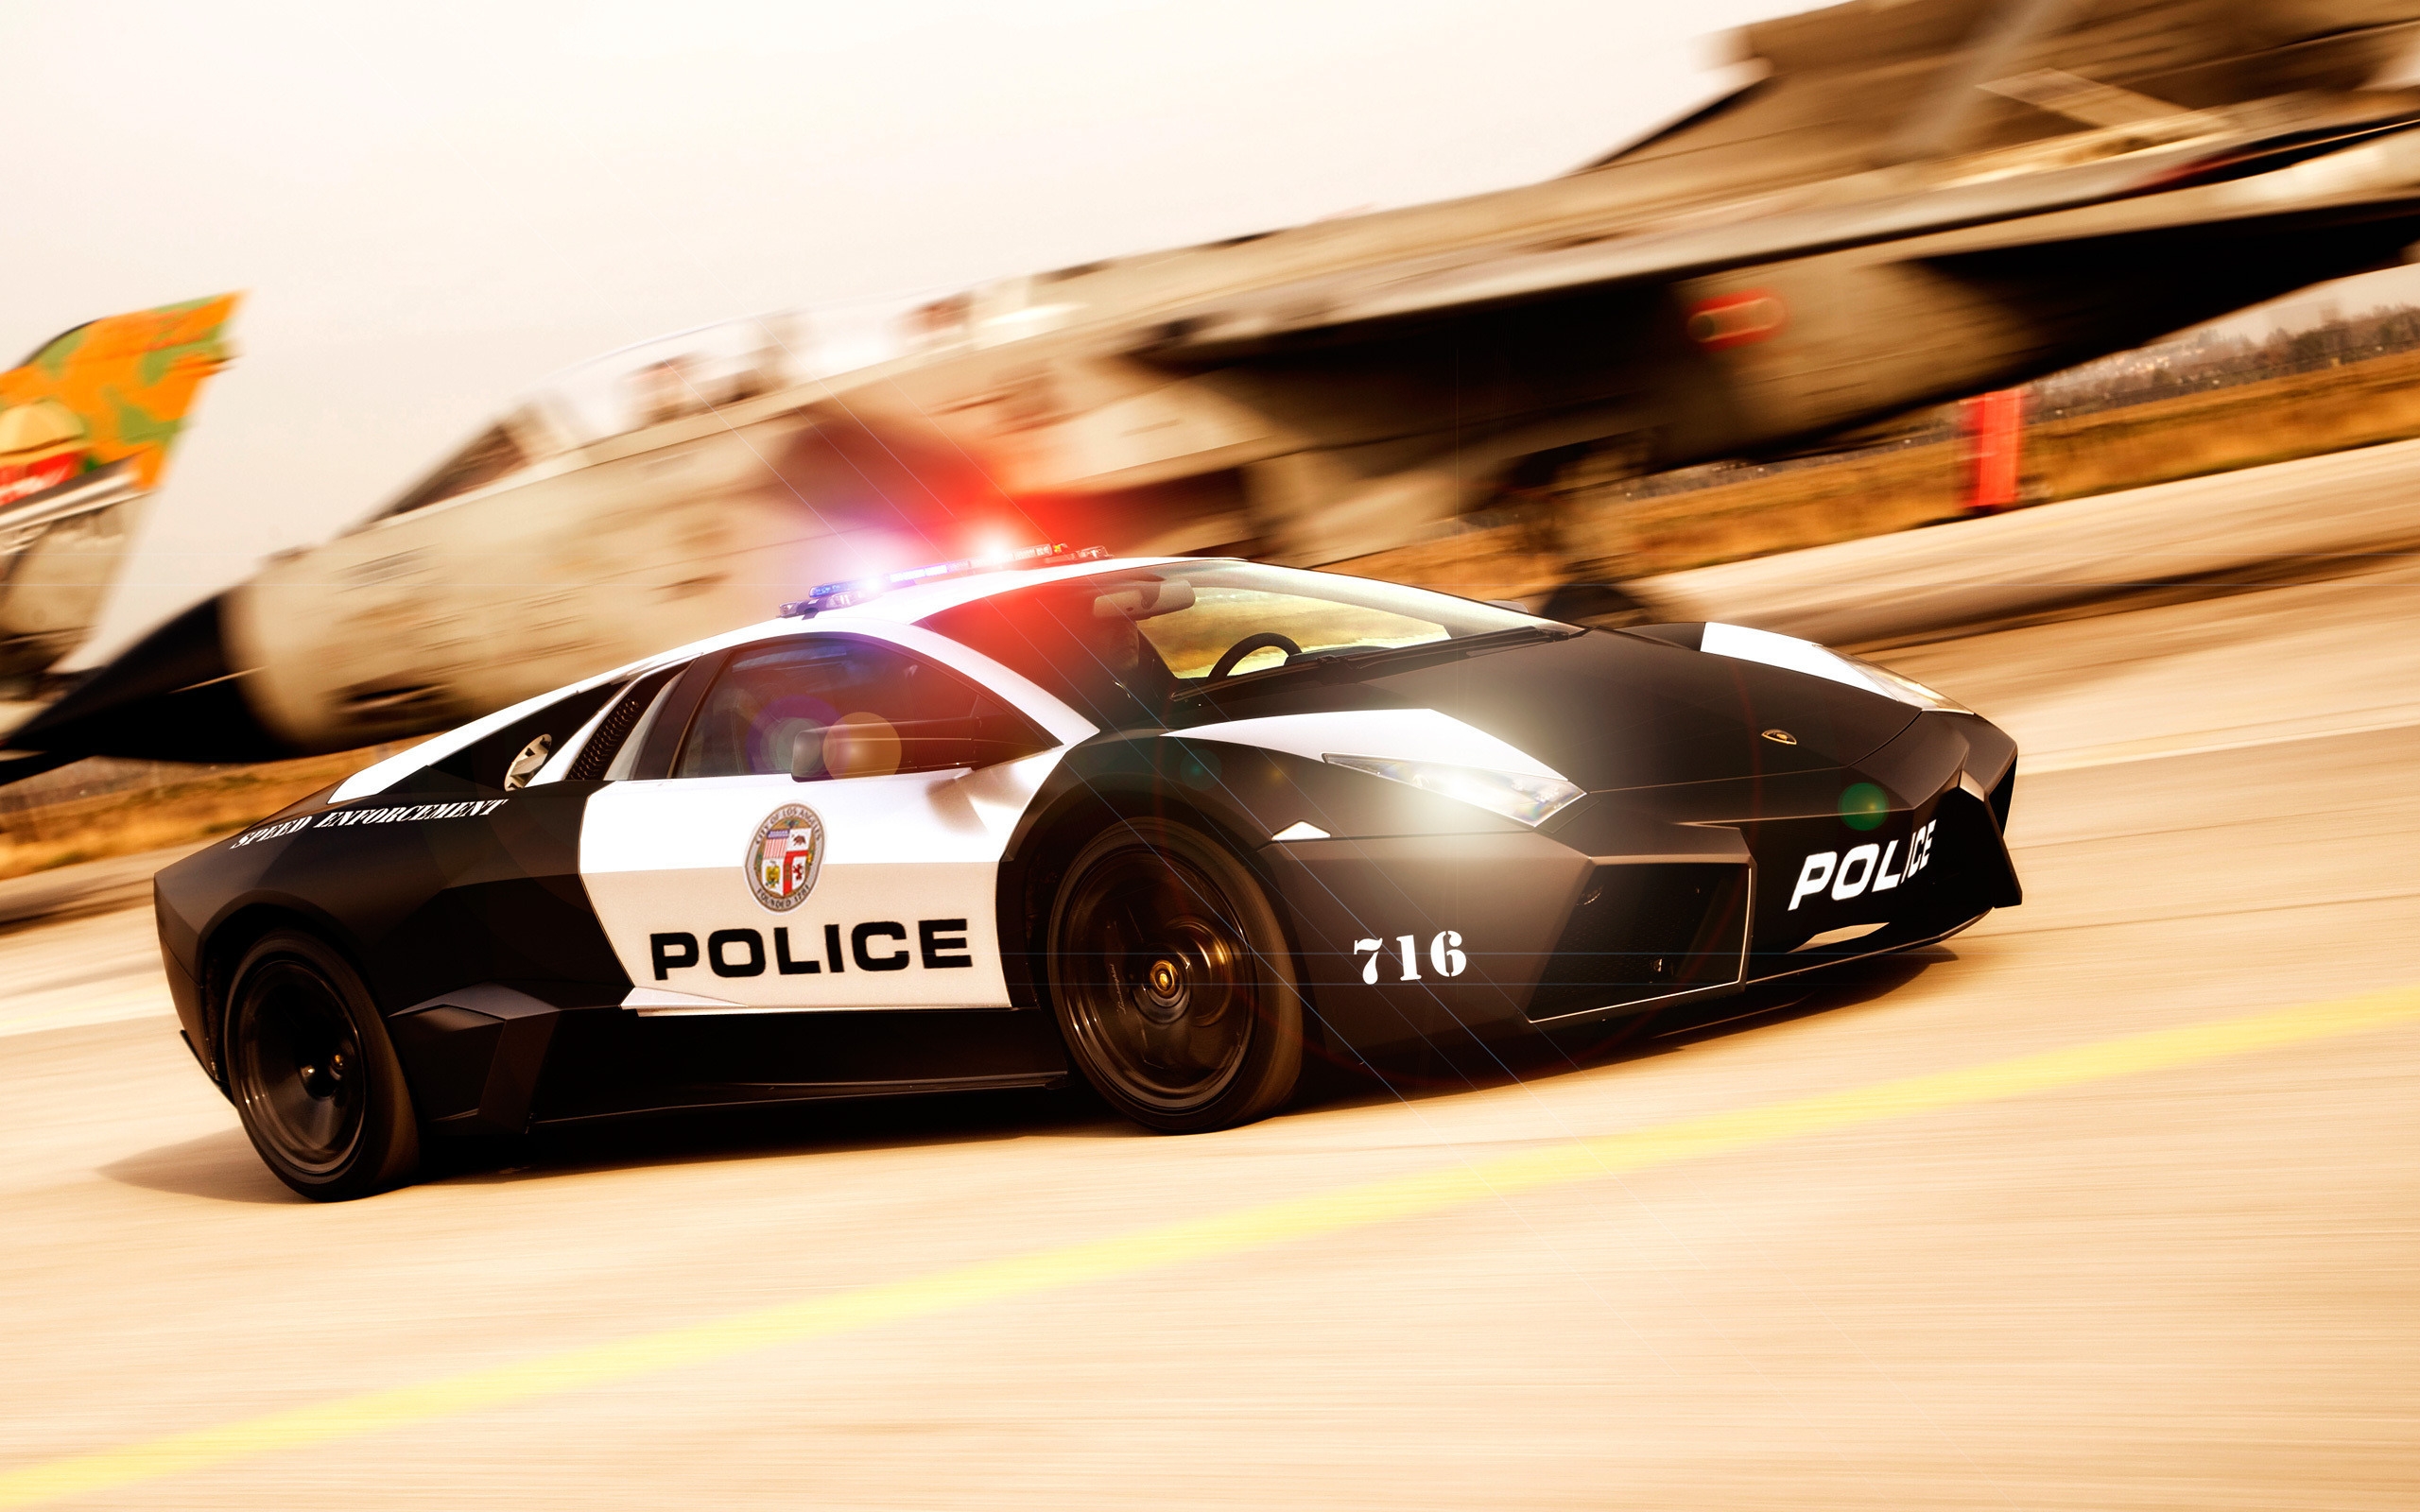 Lamborghini Police Car NFS for 2560 x 1600 widescreen resolution